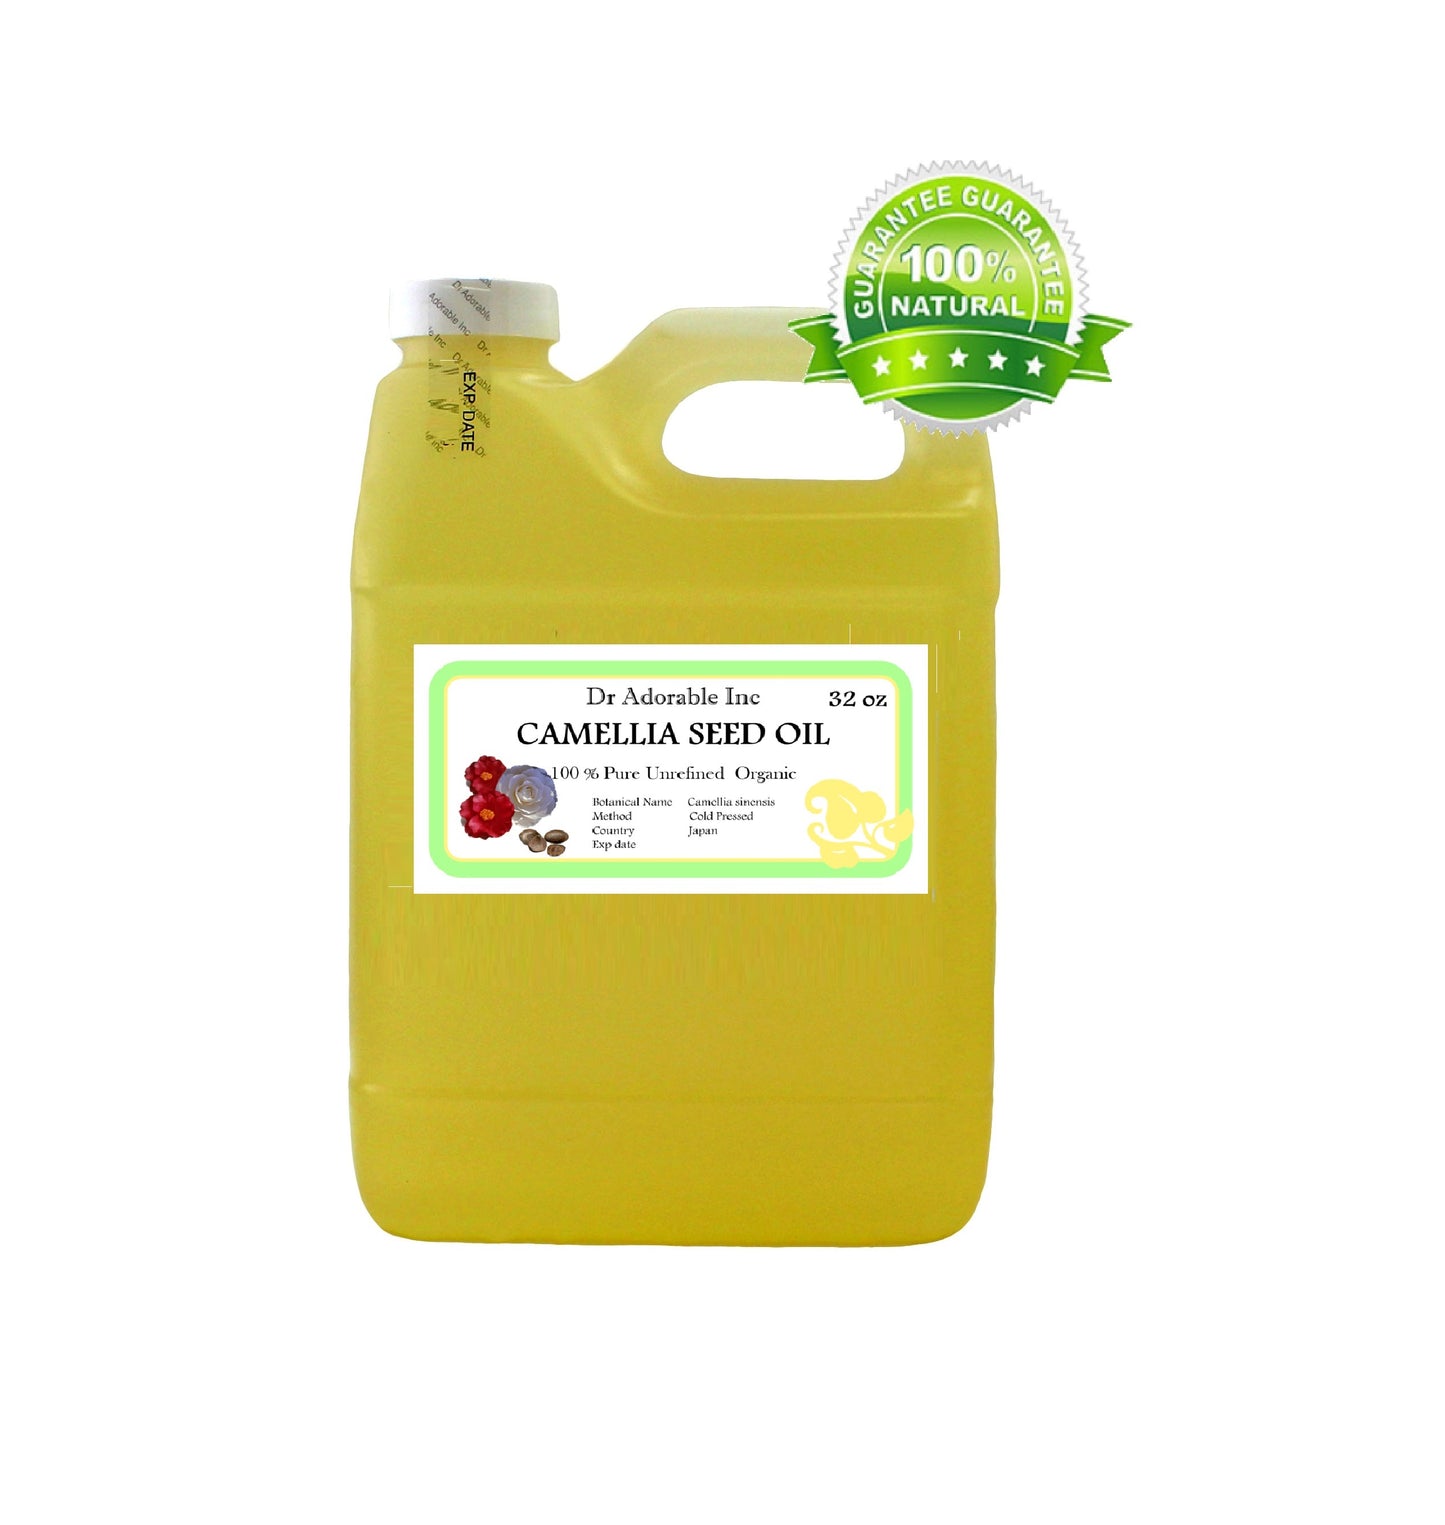 Camellia Seed Oil Unrefined - 100% Pure Natural Organic Cold Pressed